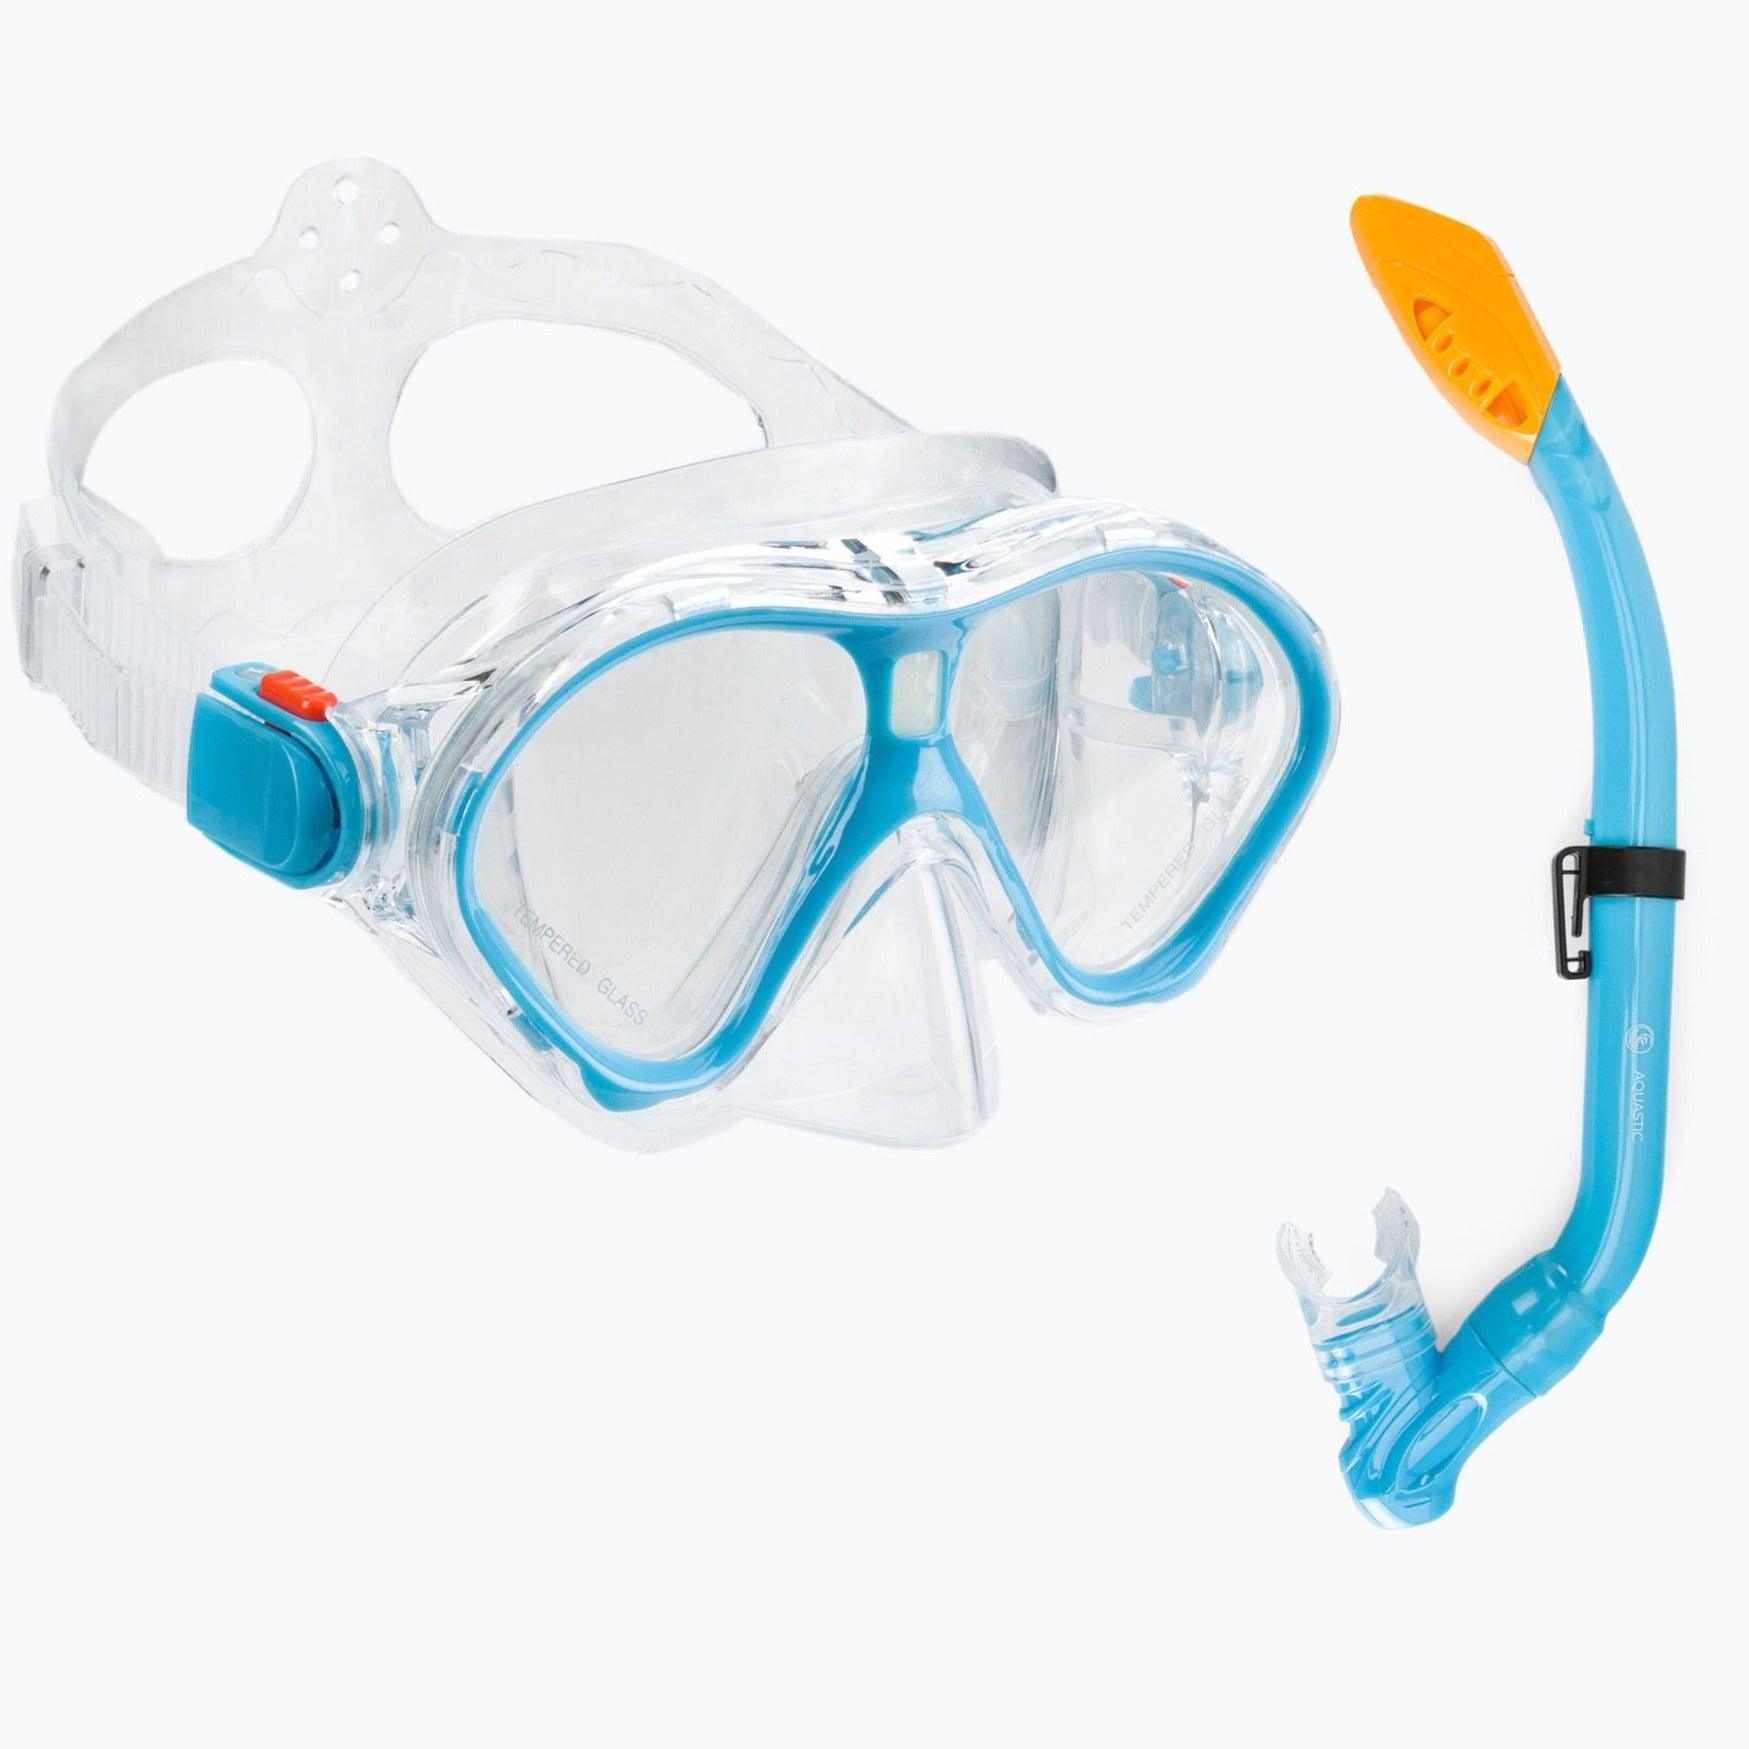 Aquastic: Mask and Snorkel for Children